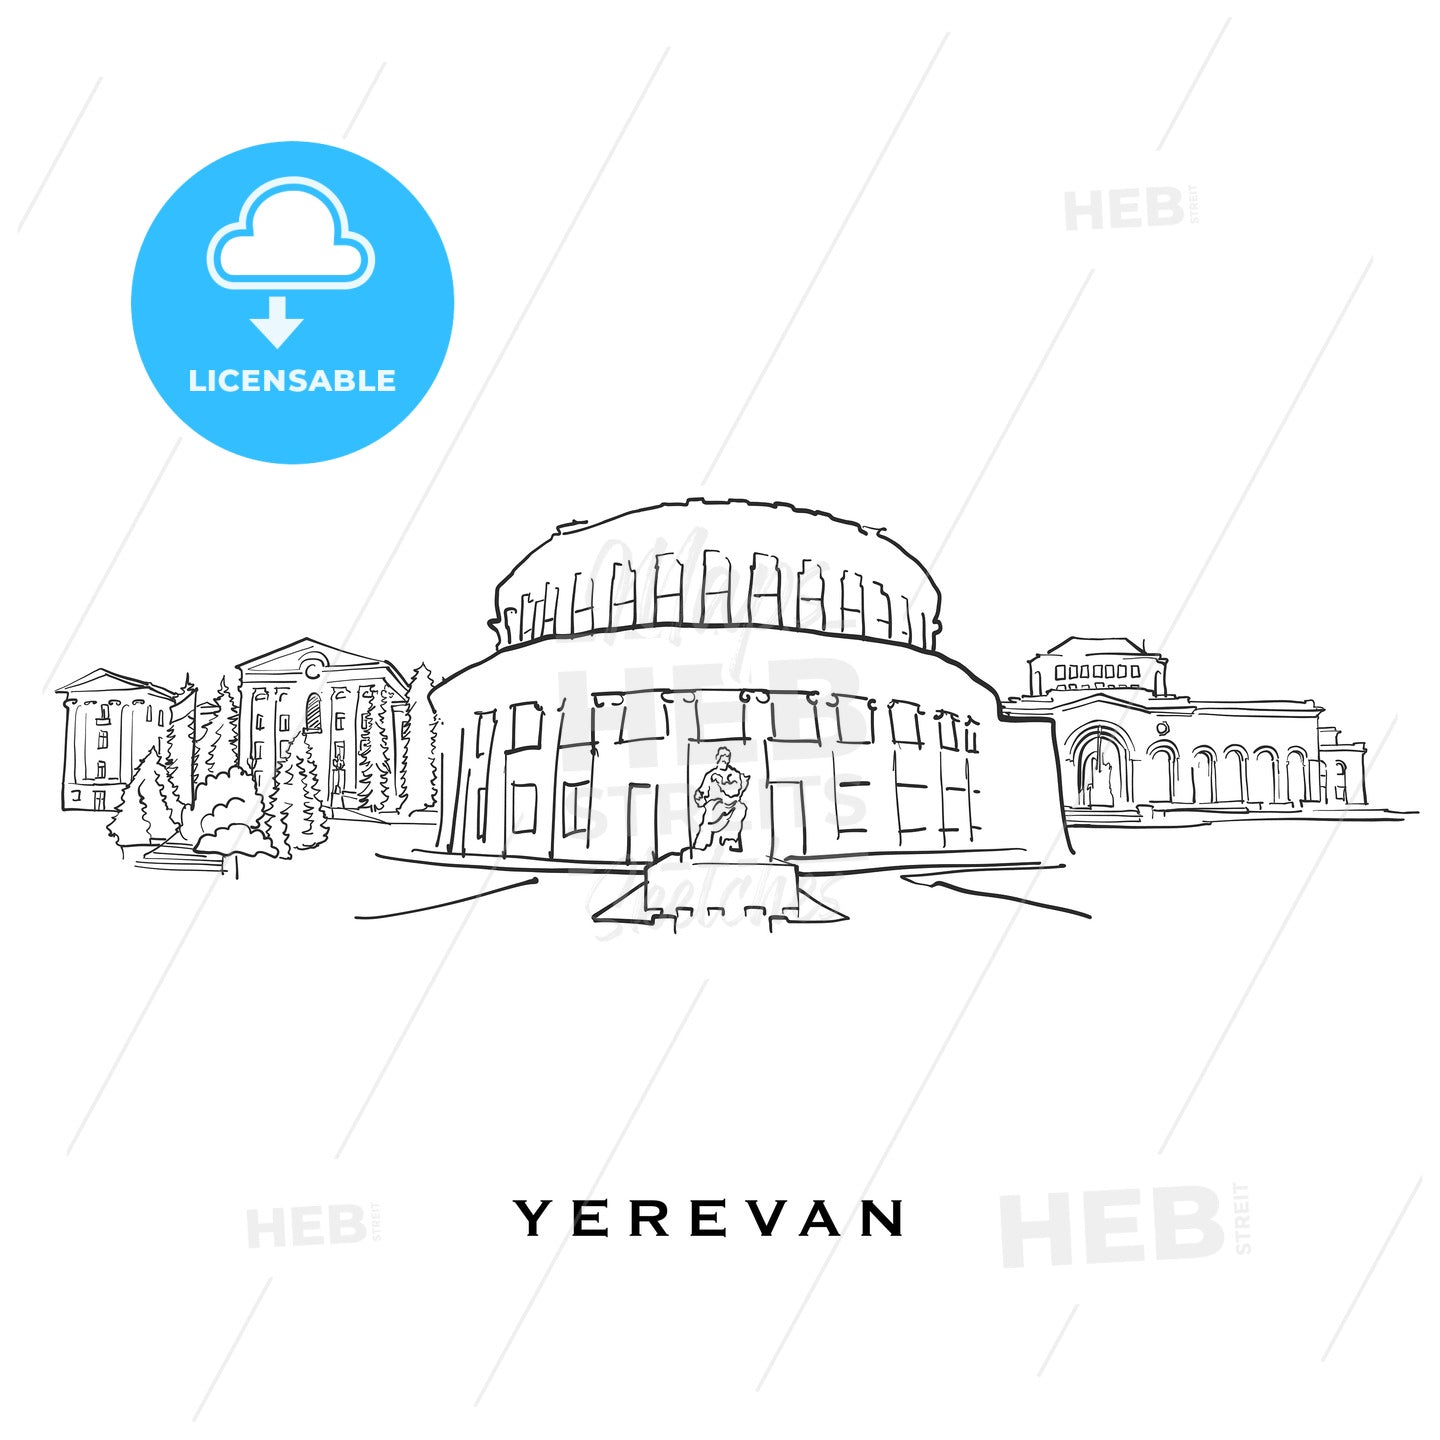 Yerevan Armenia famous architecture – instant download